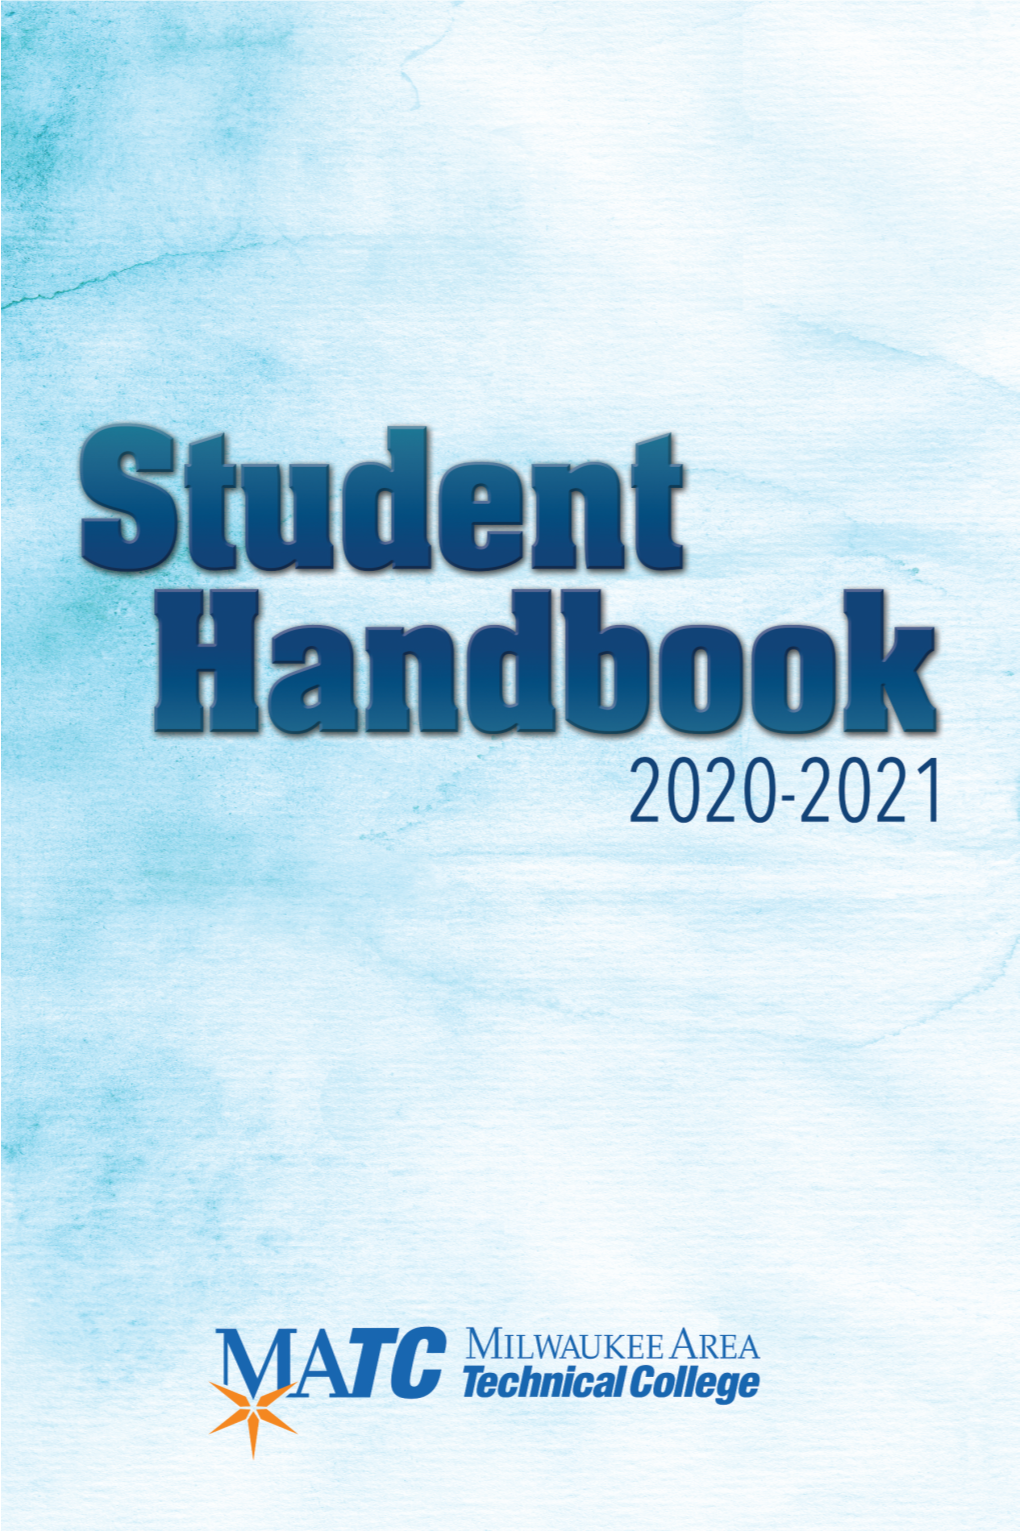 Student Handbook Layout 1 1/14/21 11:24 AM Page 1 2020-21 Student Handbook Layout 1 1/14/21 11:24 AM Page 1